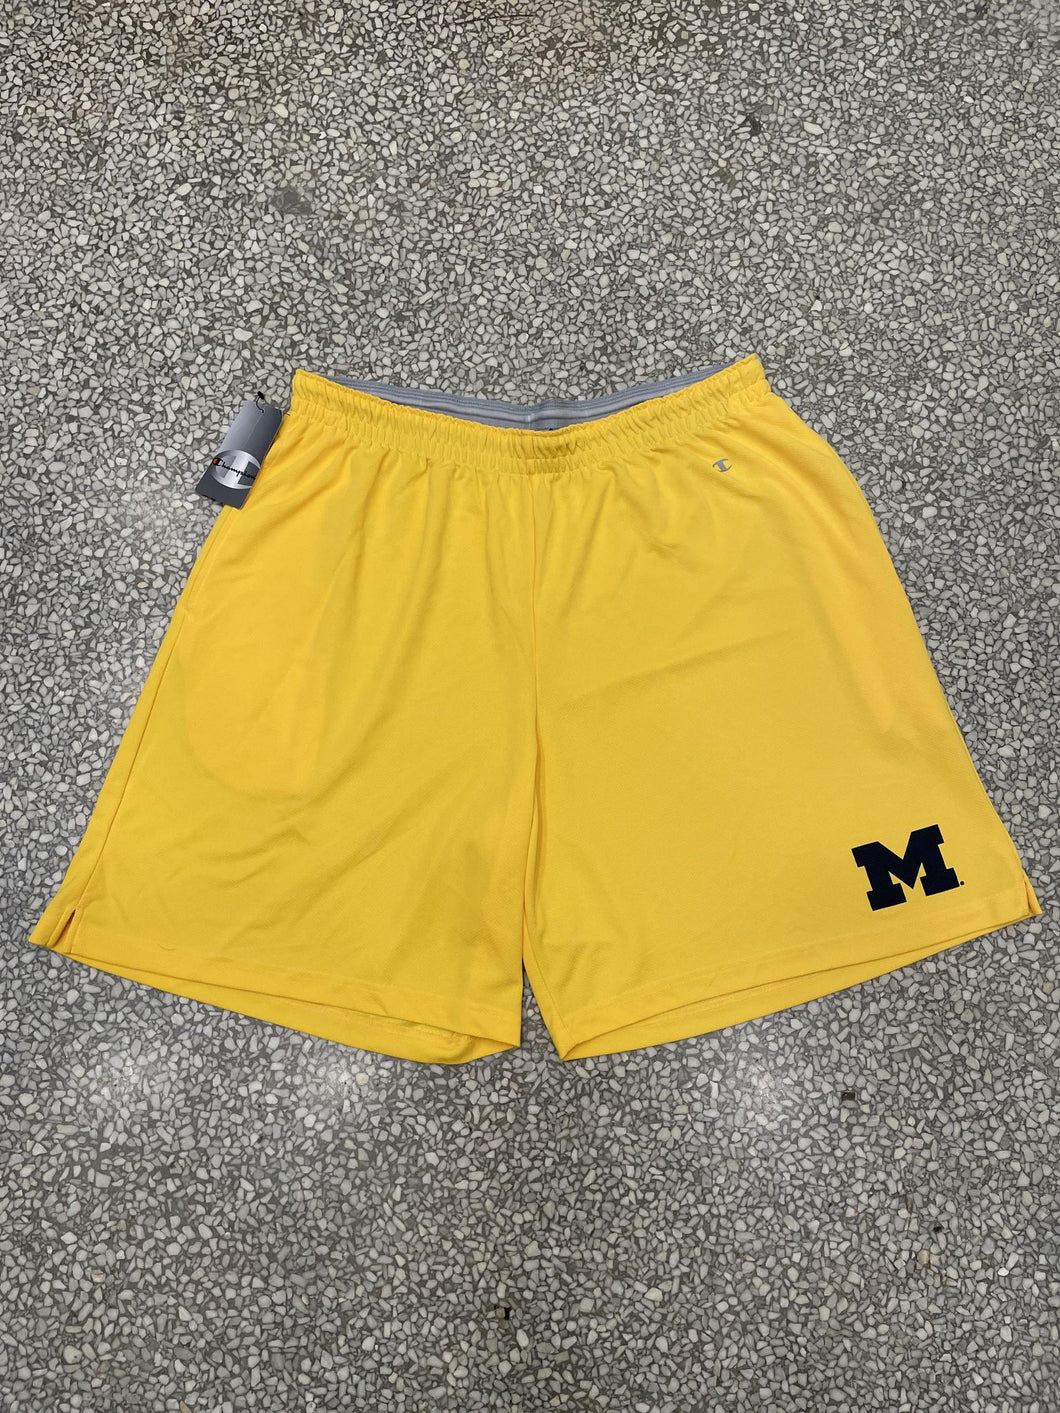 Michigan Vintage Champion Shorts ABC Vintage 